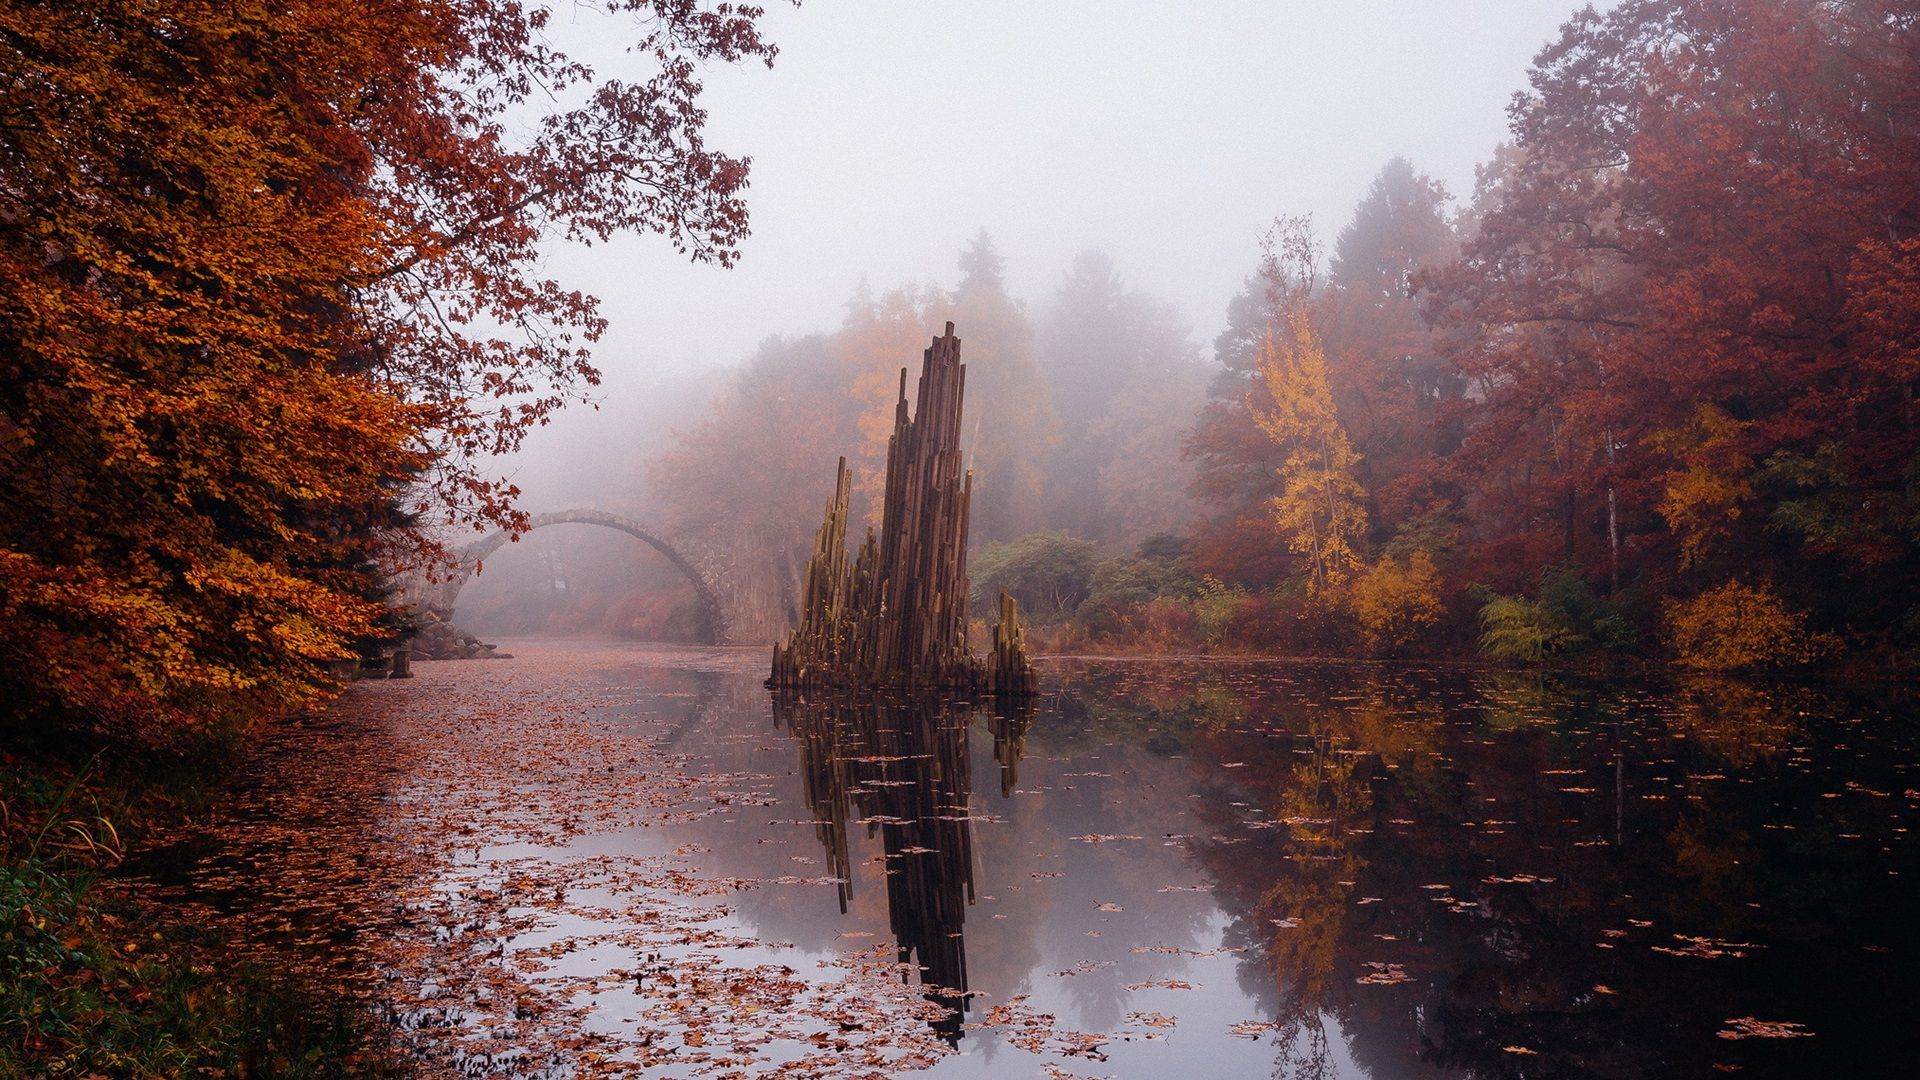 Autumn, Stone Bridge, River, Trees, Fog, Germany 640x1136 IPhone 5 5S 5C SE Wallpaper, Background, Picture, Image